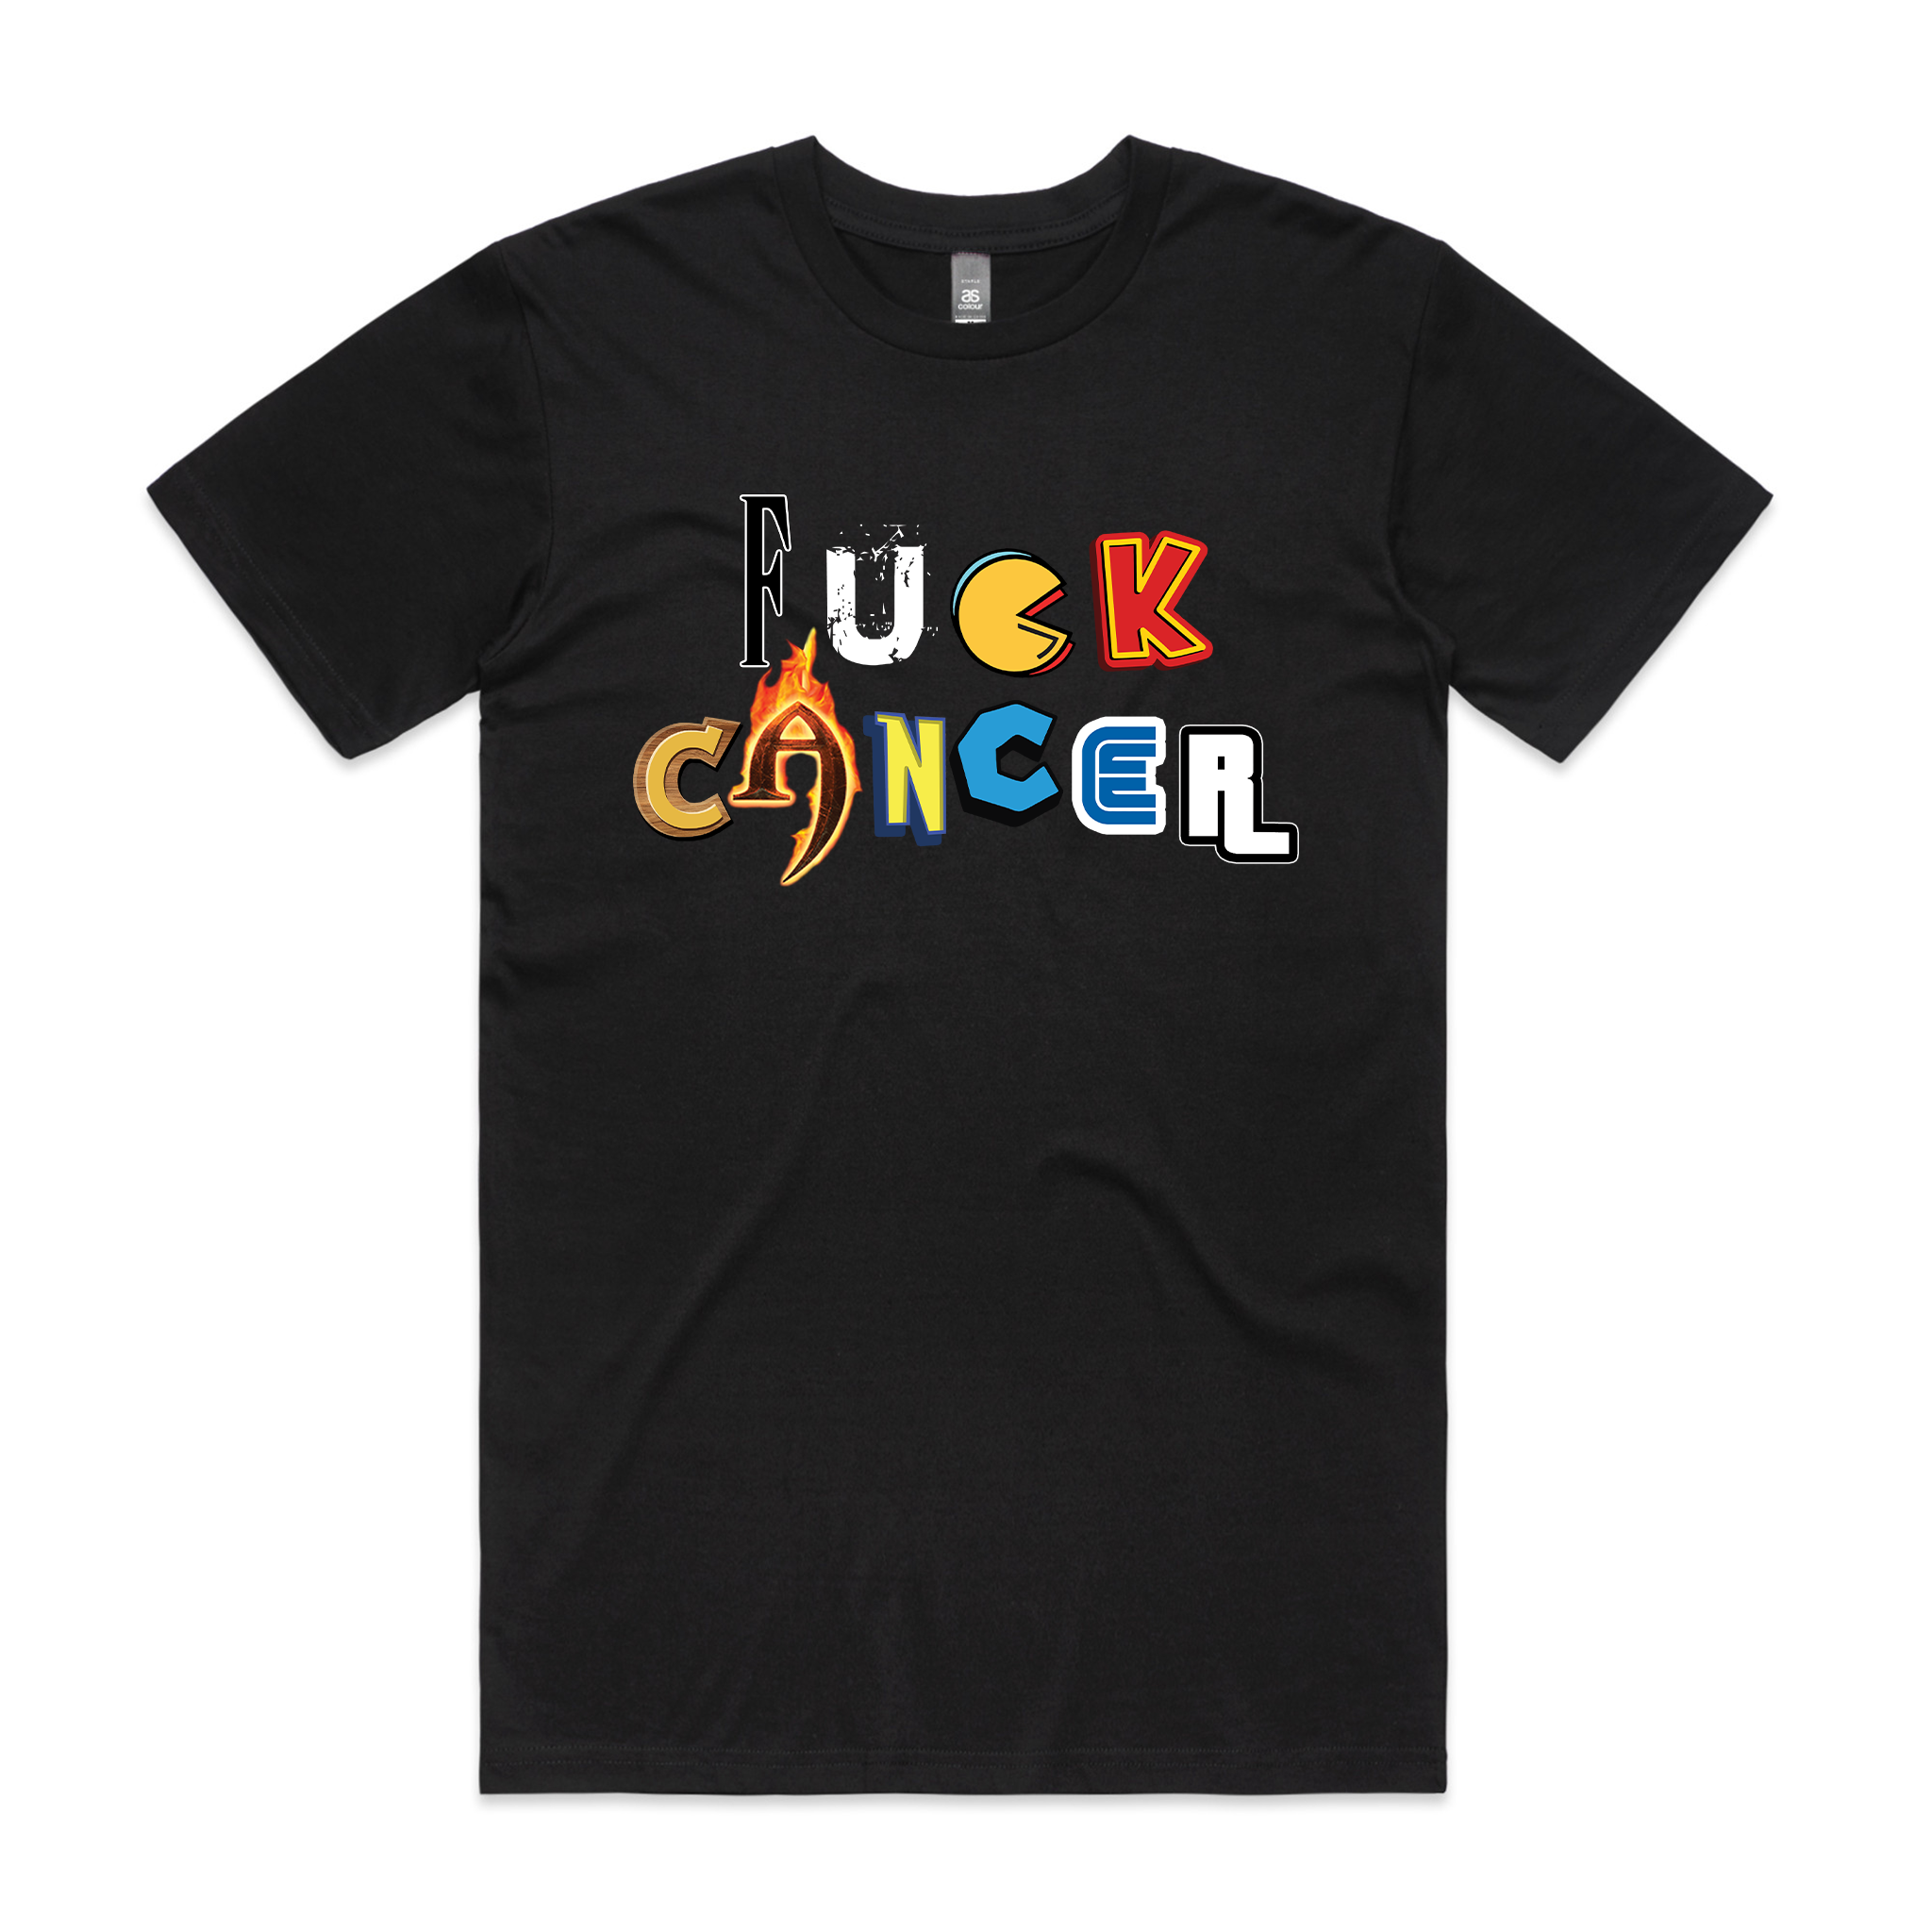 Fuck Cancer Charity Tee